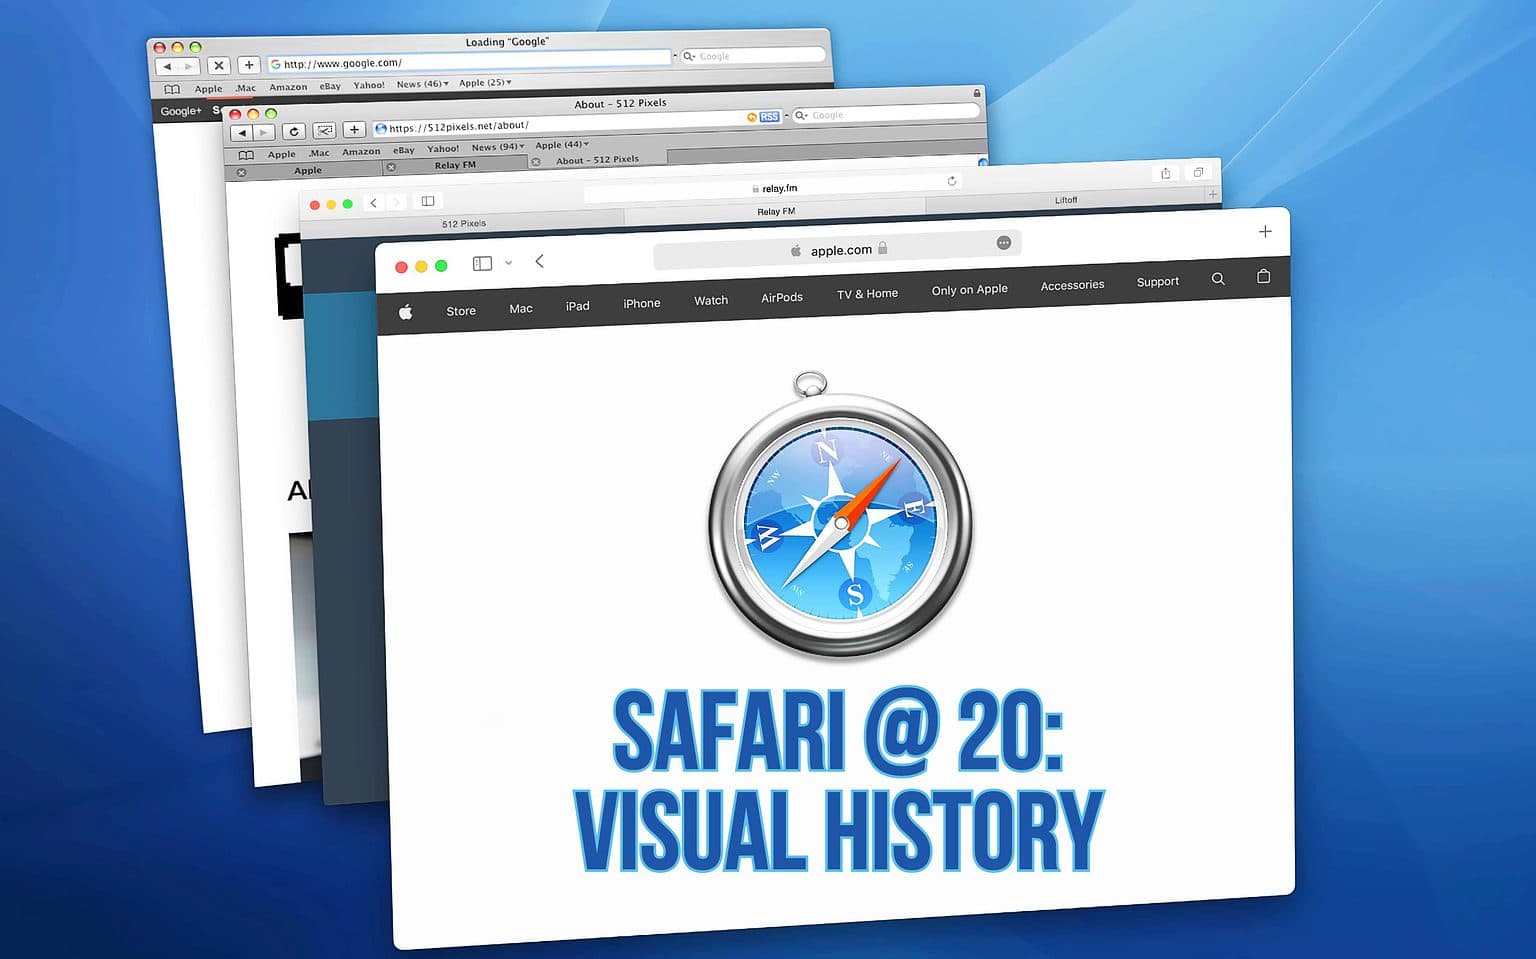 Safari @ 20: Visual history.